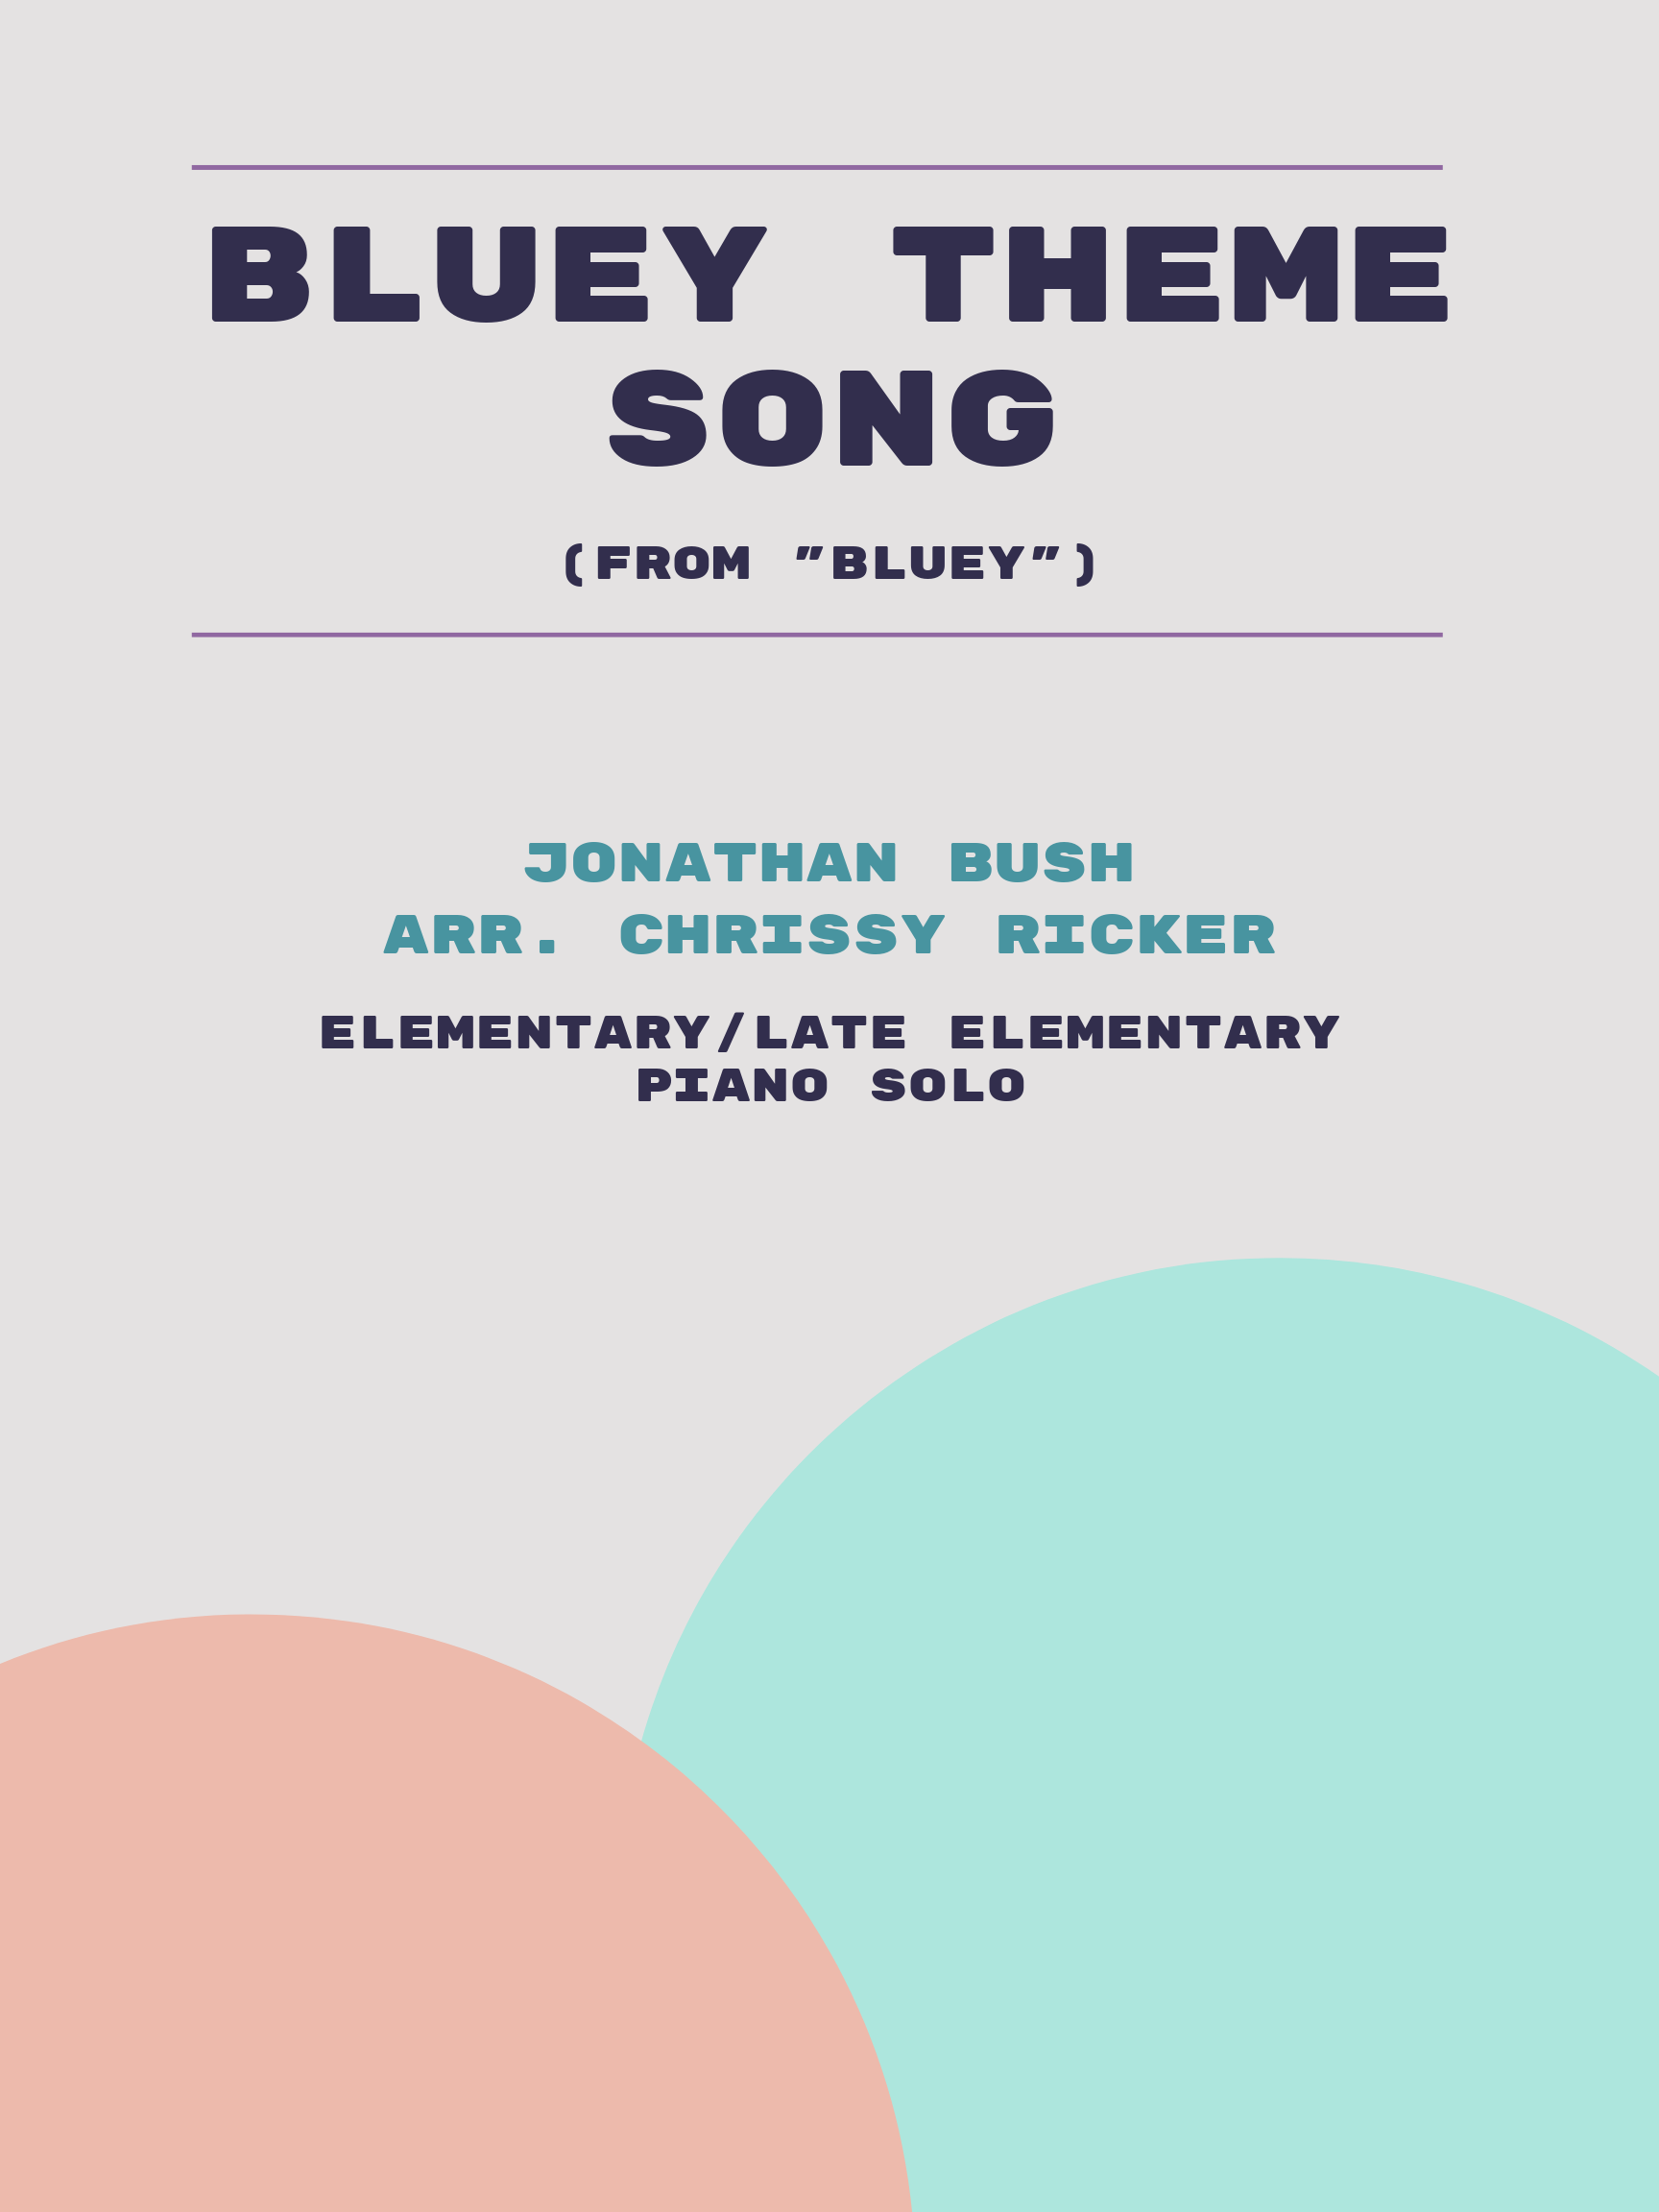 Bluey Theme Song by Jonathan Bush